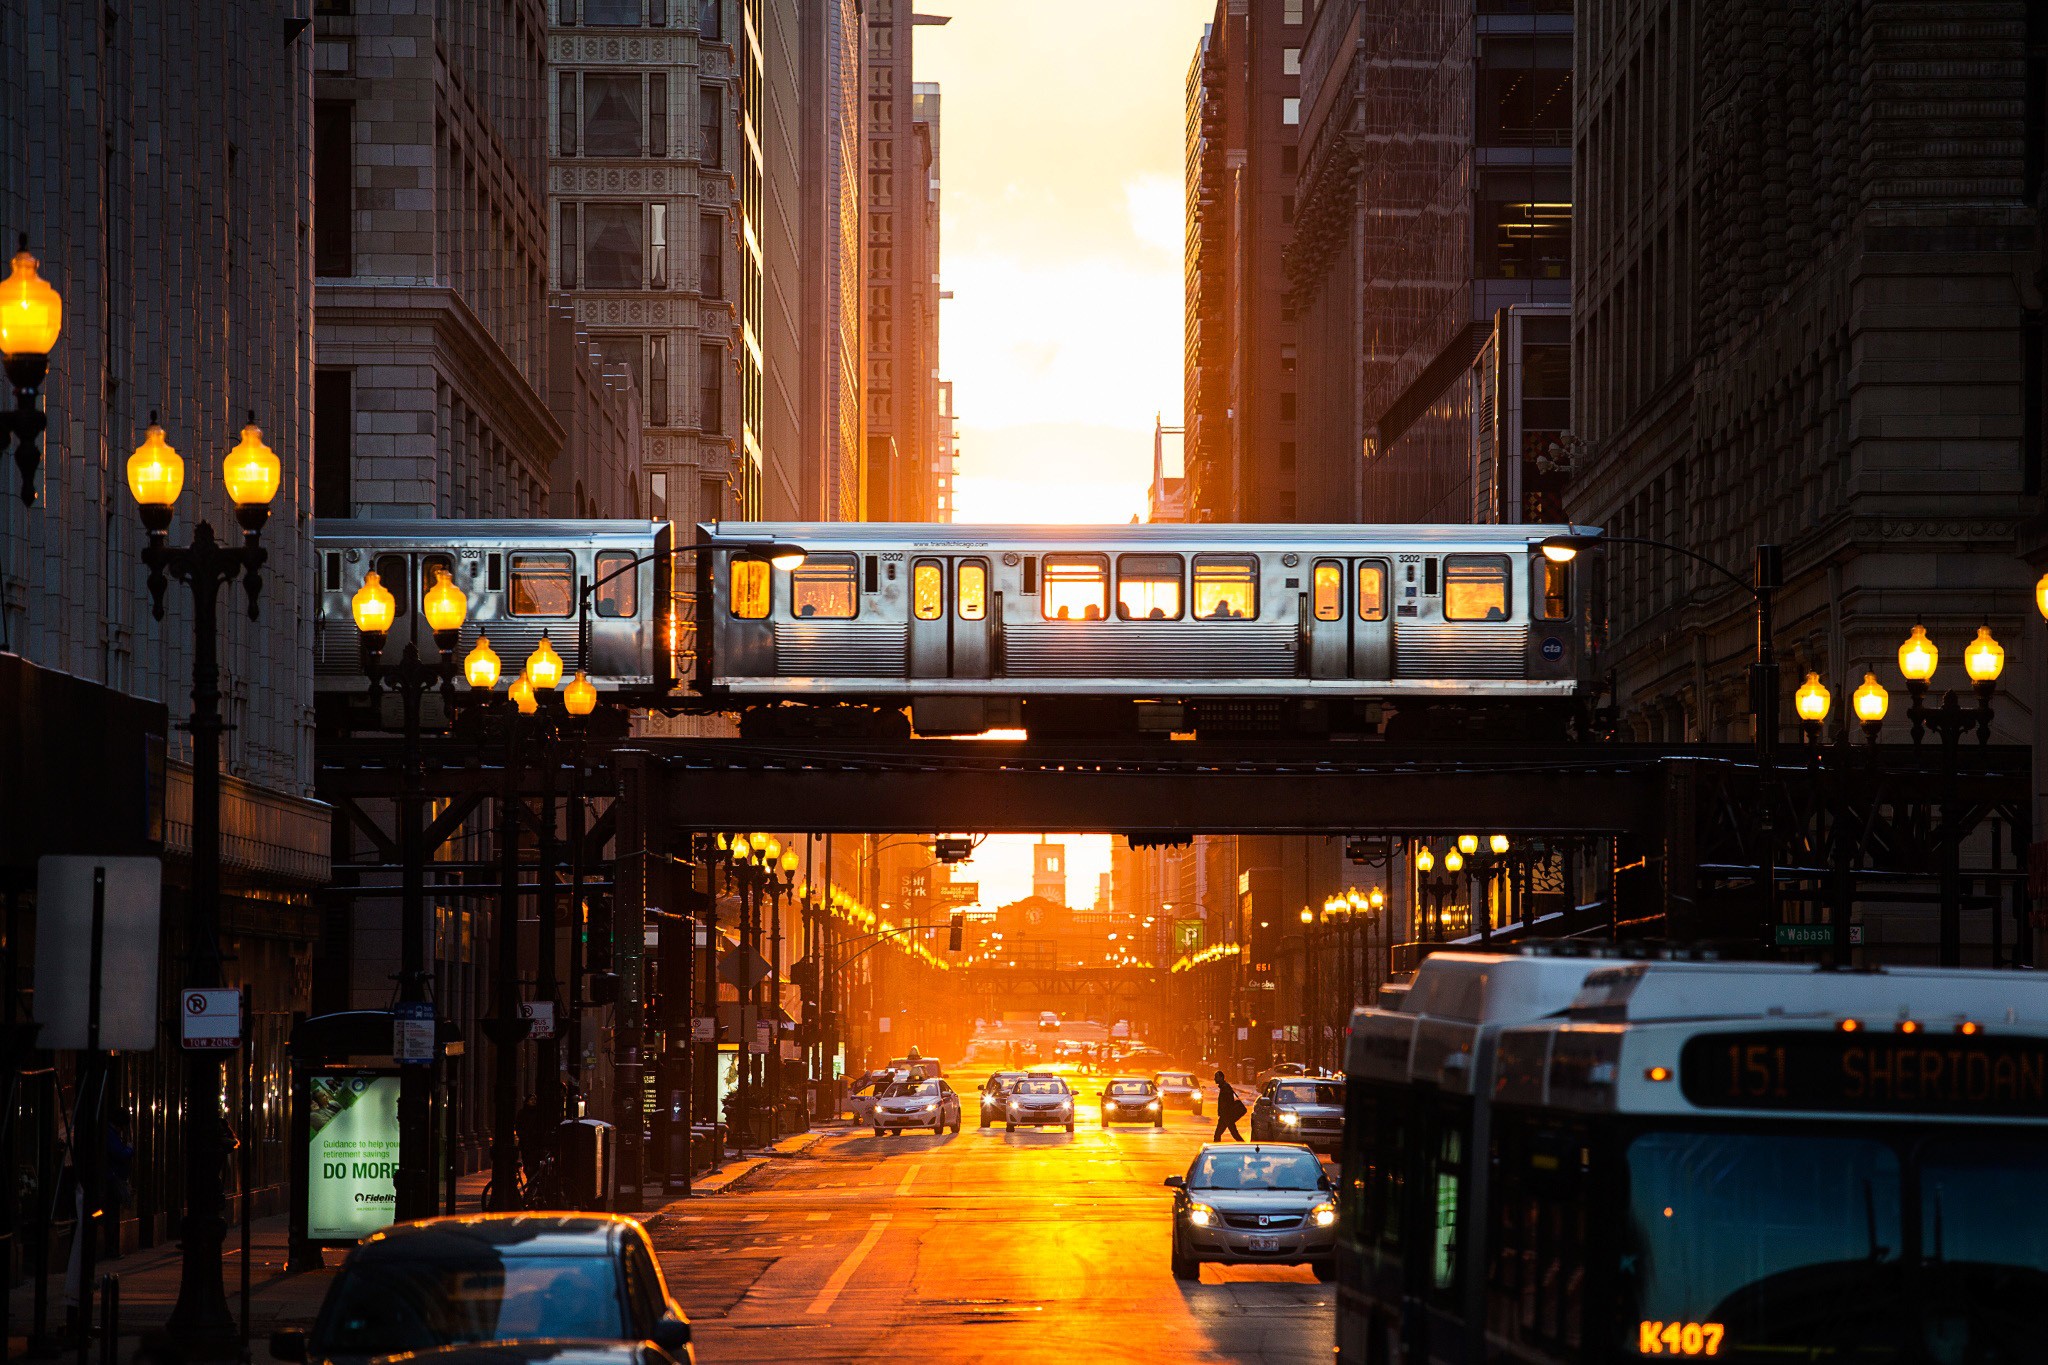 General 2048x1365 city street USA street light subway urban Chicago sunlight buses car architecture train lantern sunset cityscape